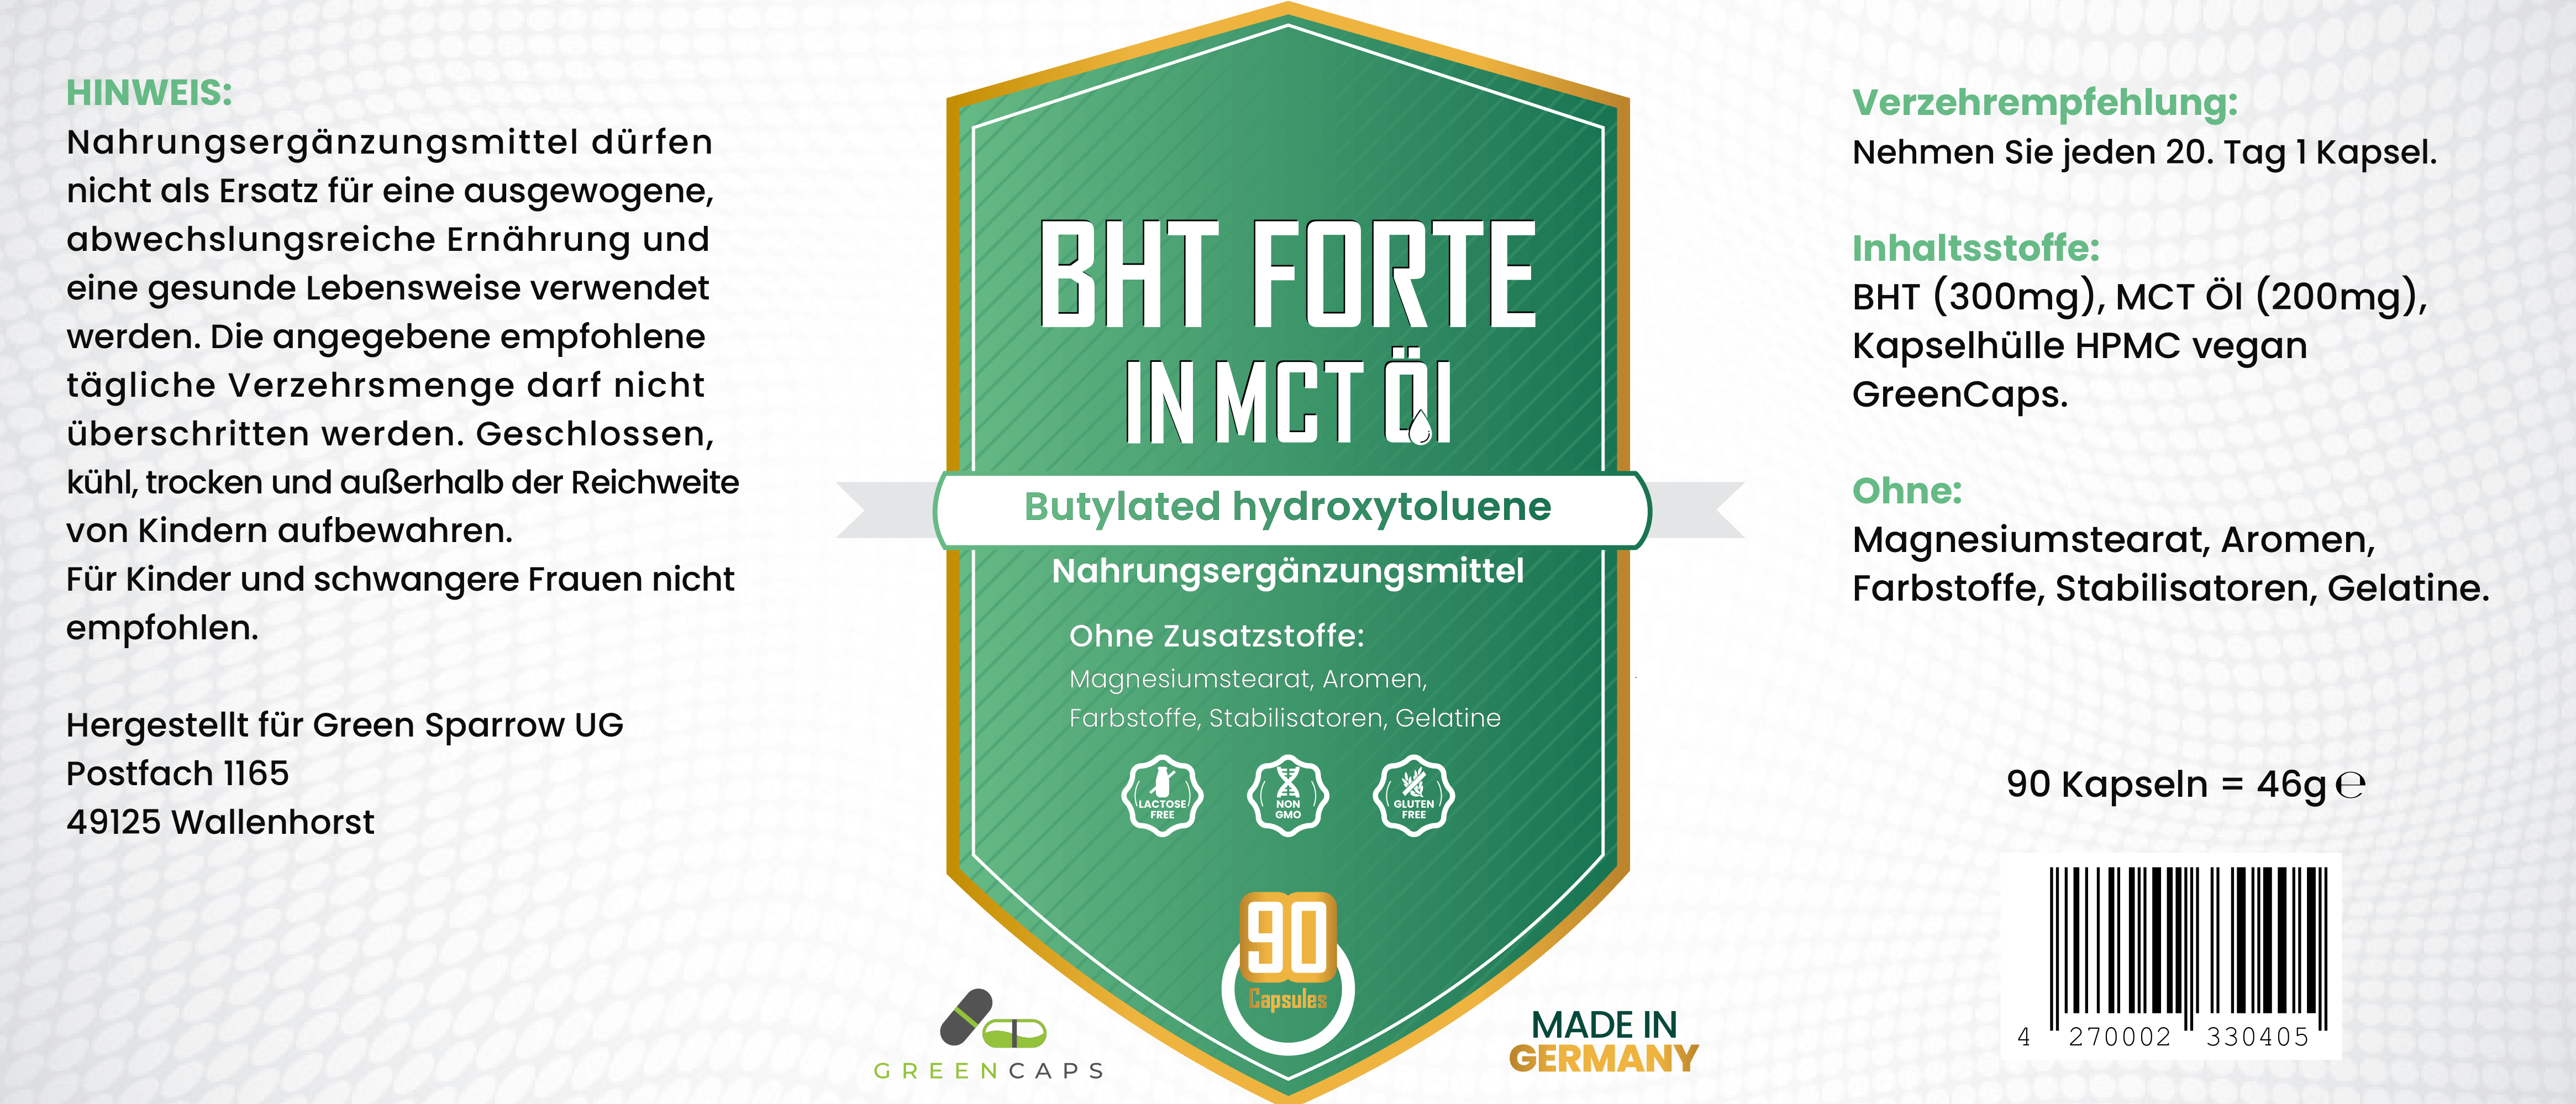 BHT Forte in MCT oil